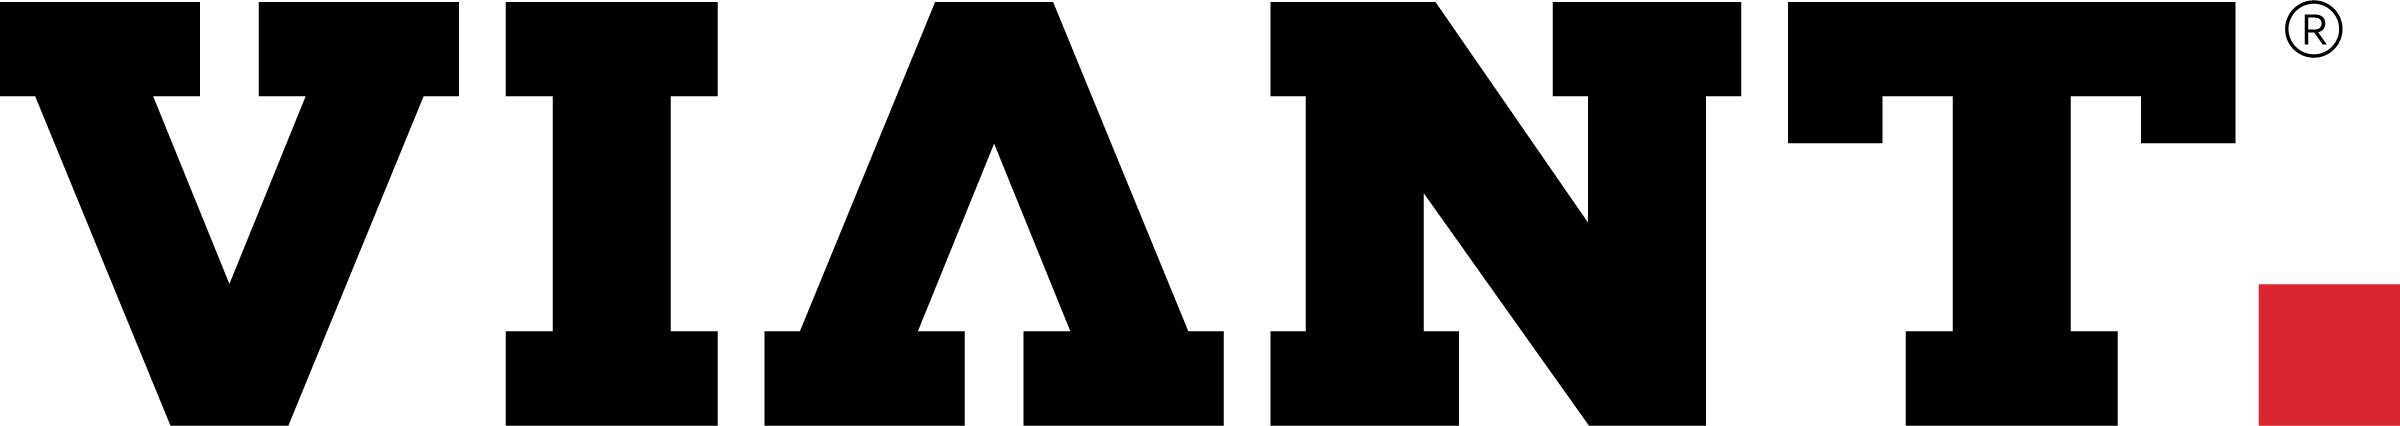 Viant Technology LLC logo